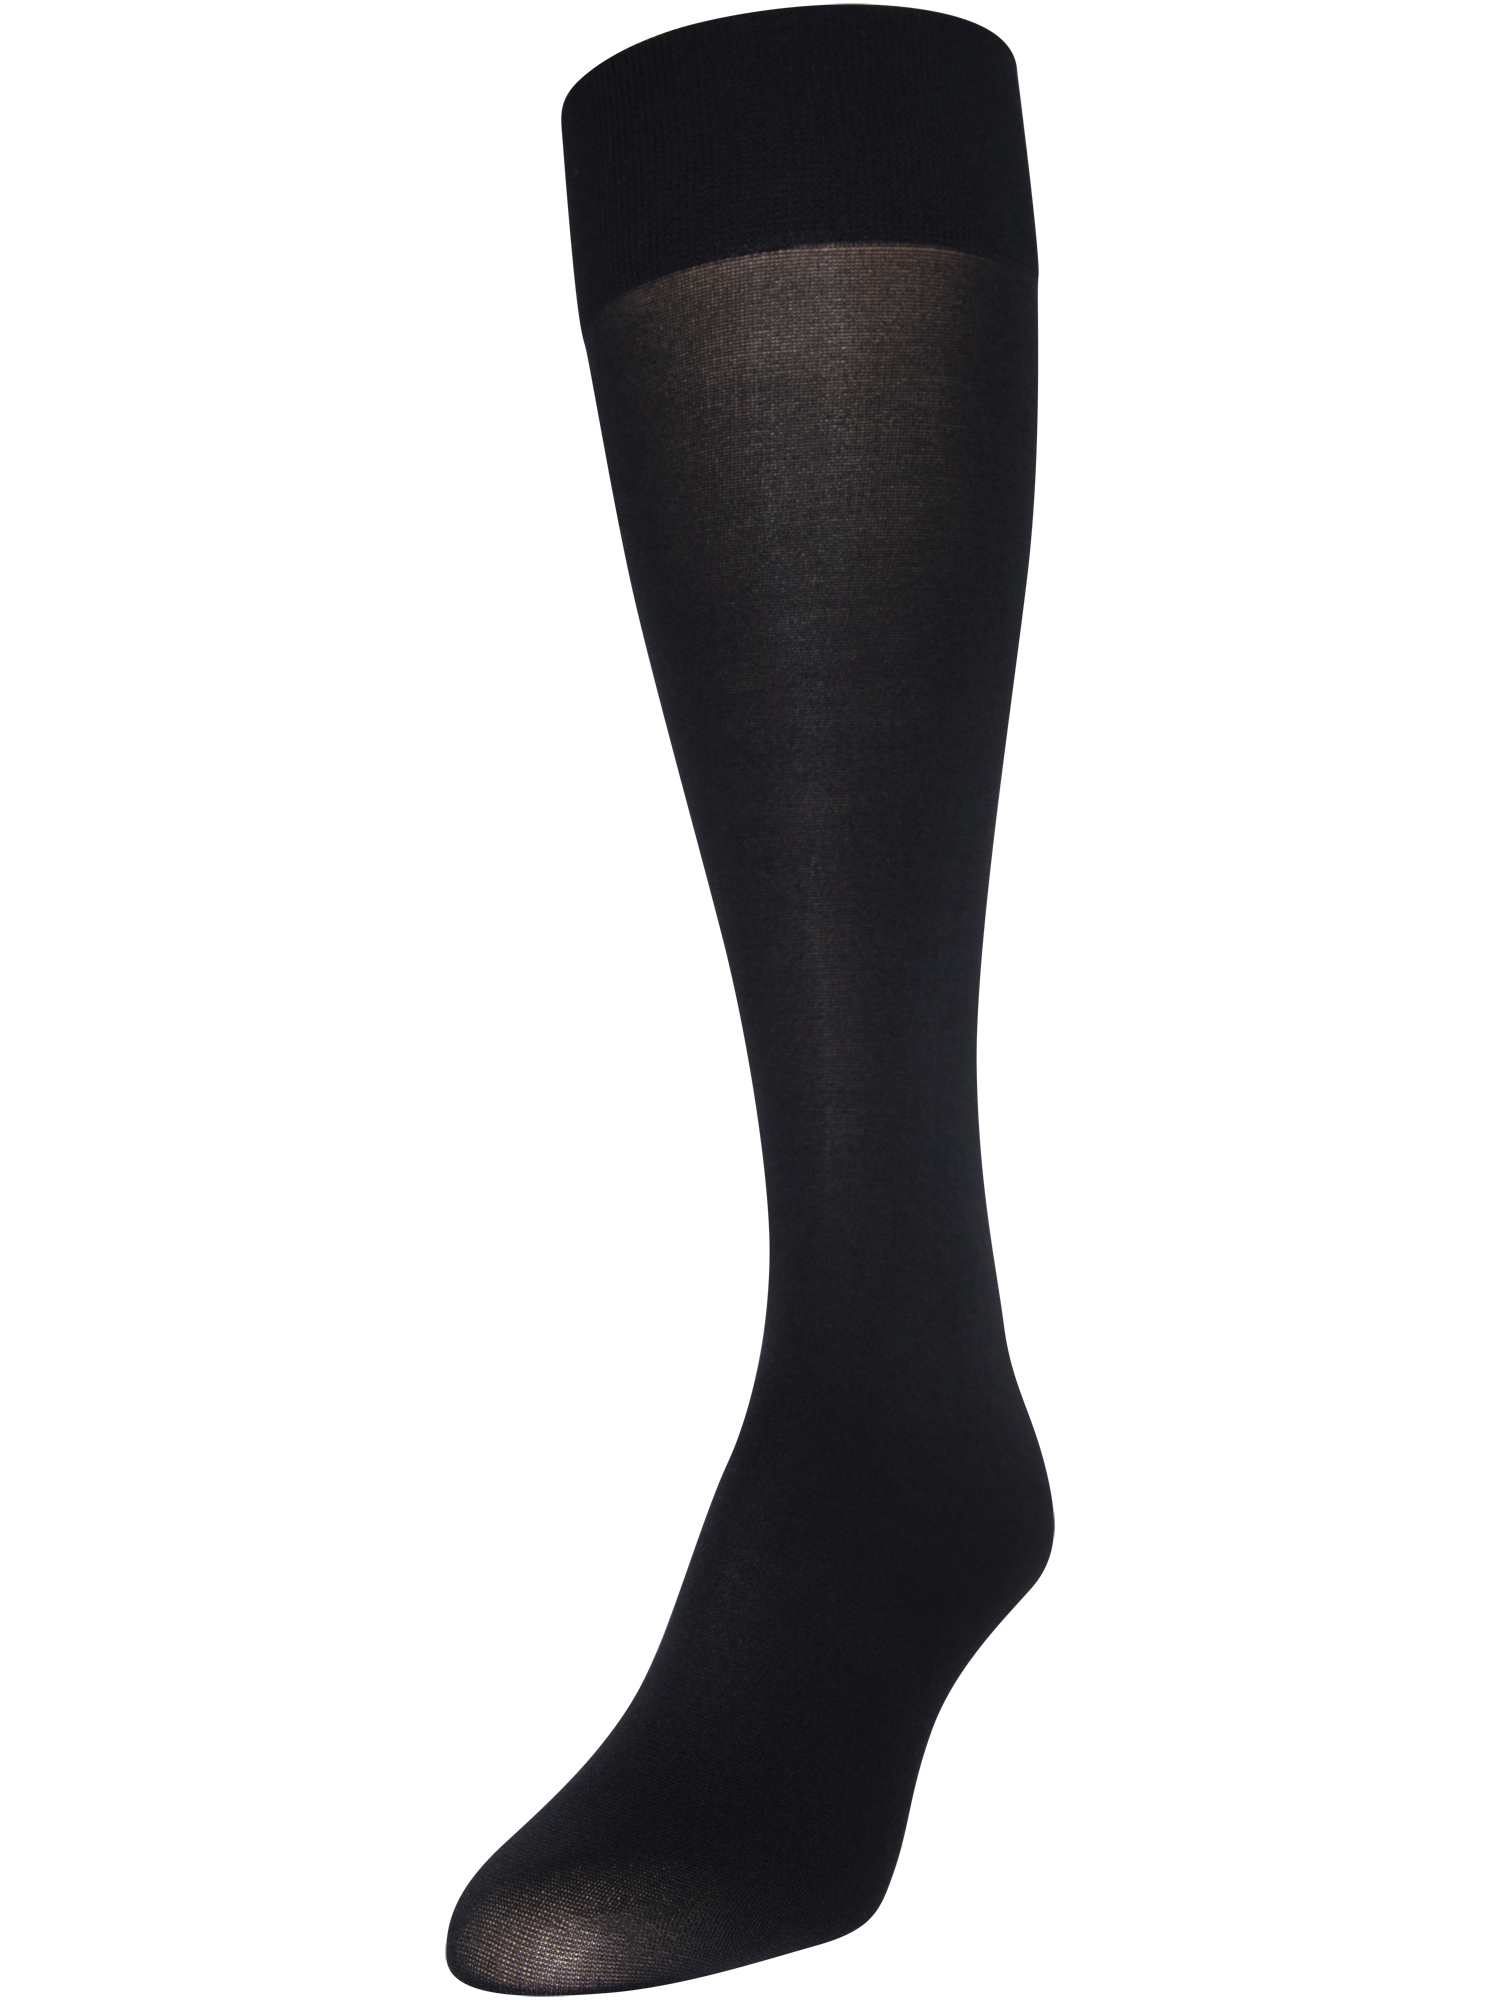 Peds Women's Knee High Trouser Socks, 6 Pairs - Walmart.com